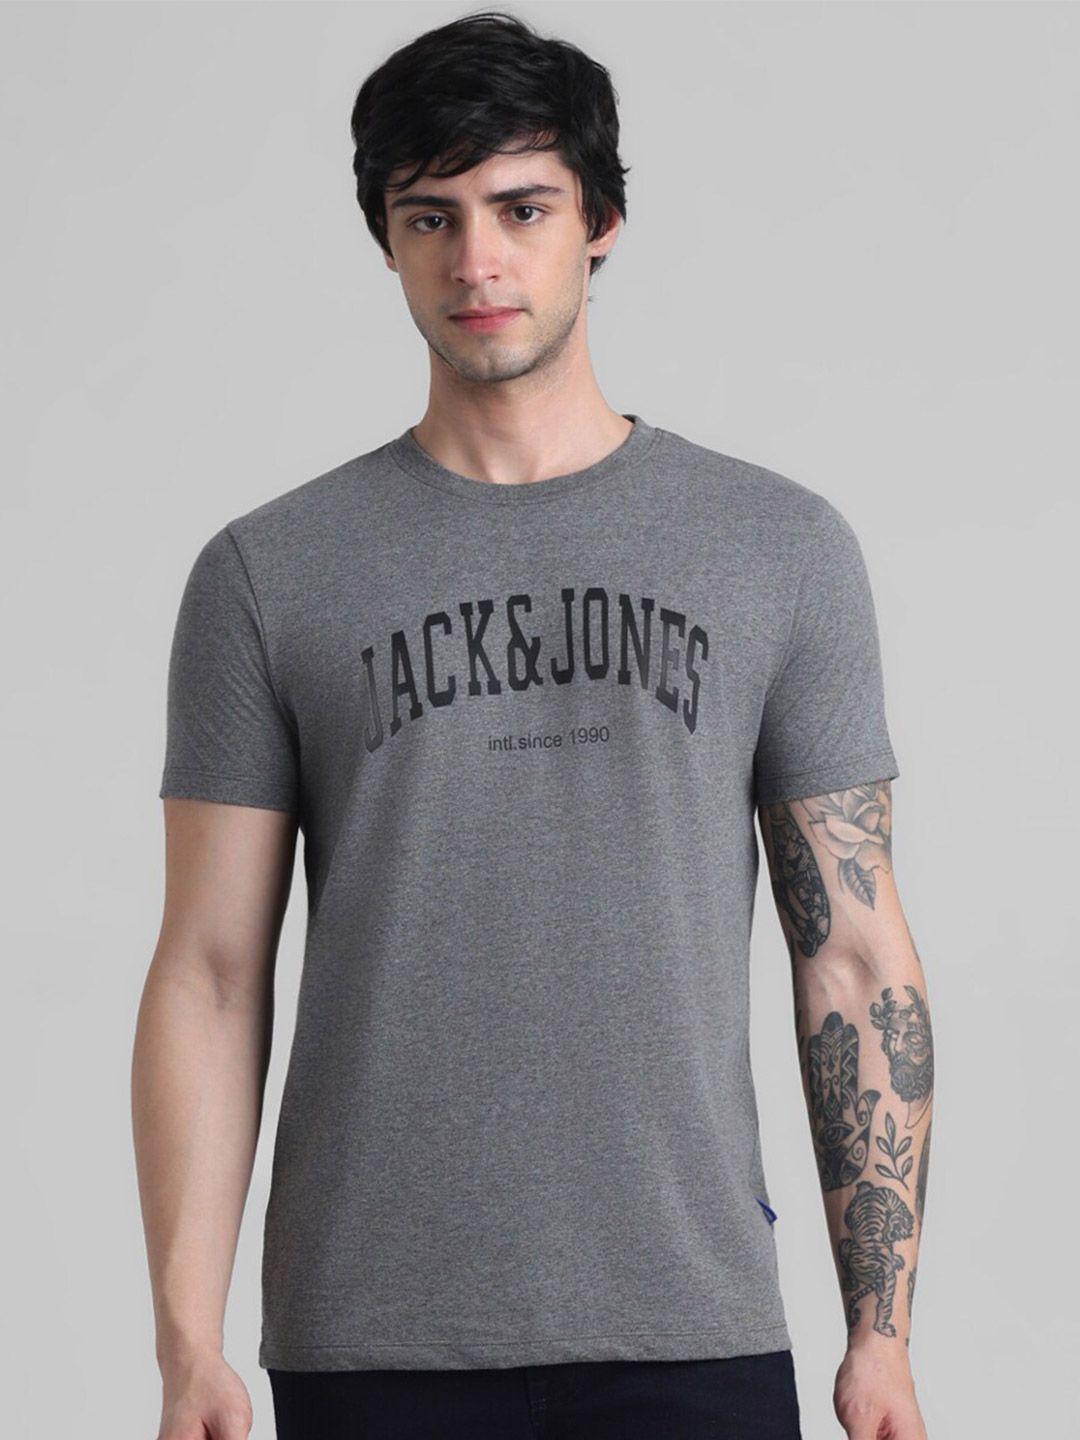 jack & jones typography printed slim fit pure cotton t-shirt